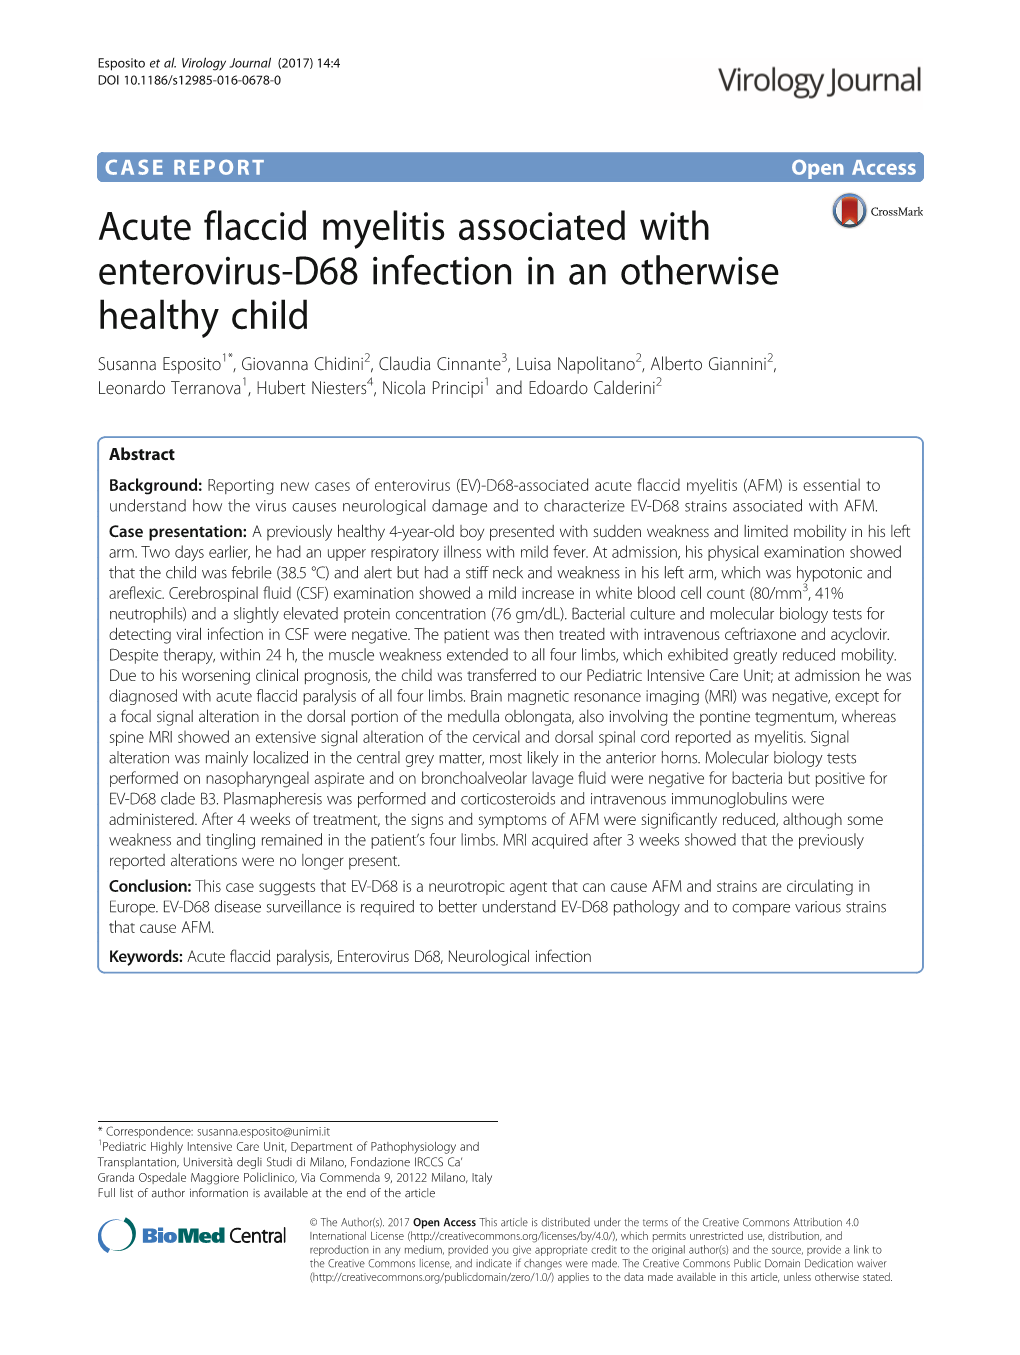 Acute Flaccid Myelitis Associated with Enterovirus-D68 Infection in An